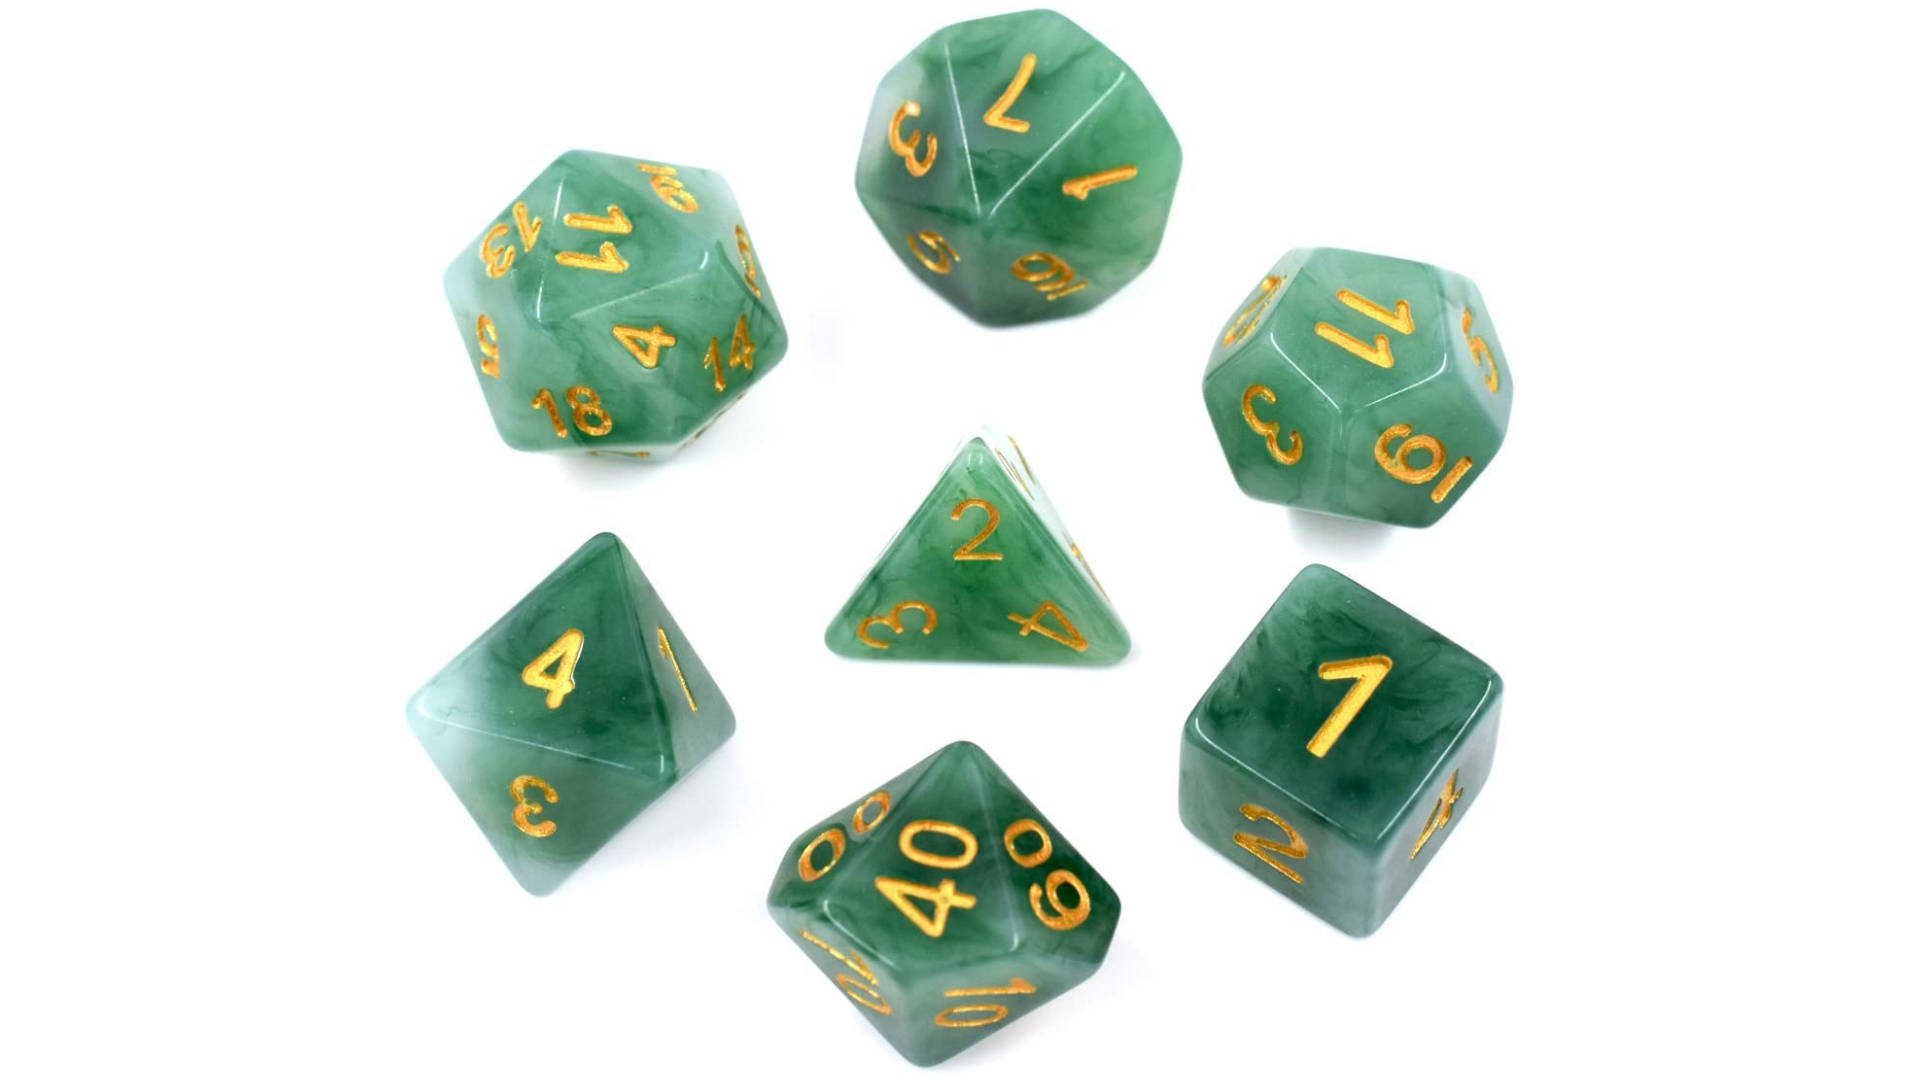 1920x1080 DnD dice: the best D\u0026D dice sets and how to choose them | Wargamer